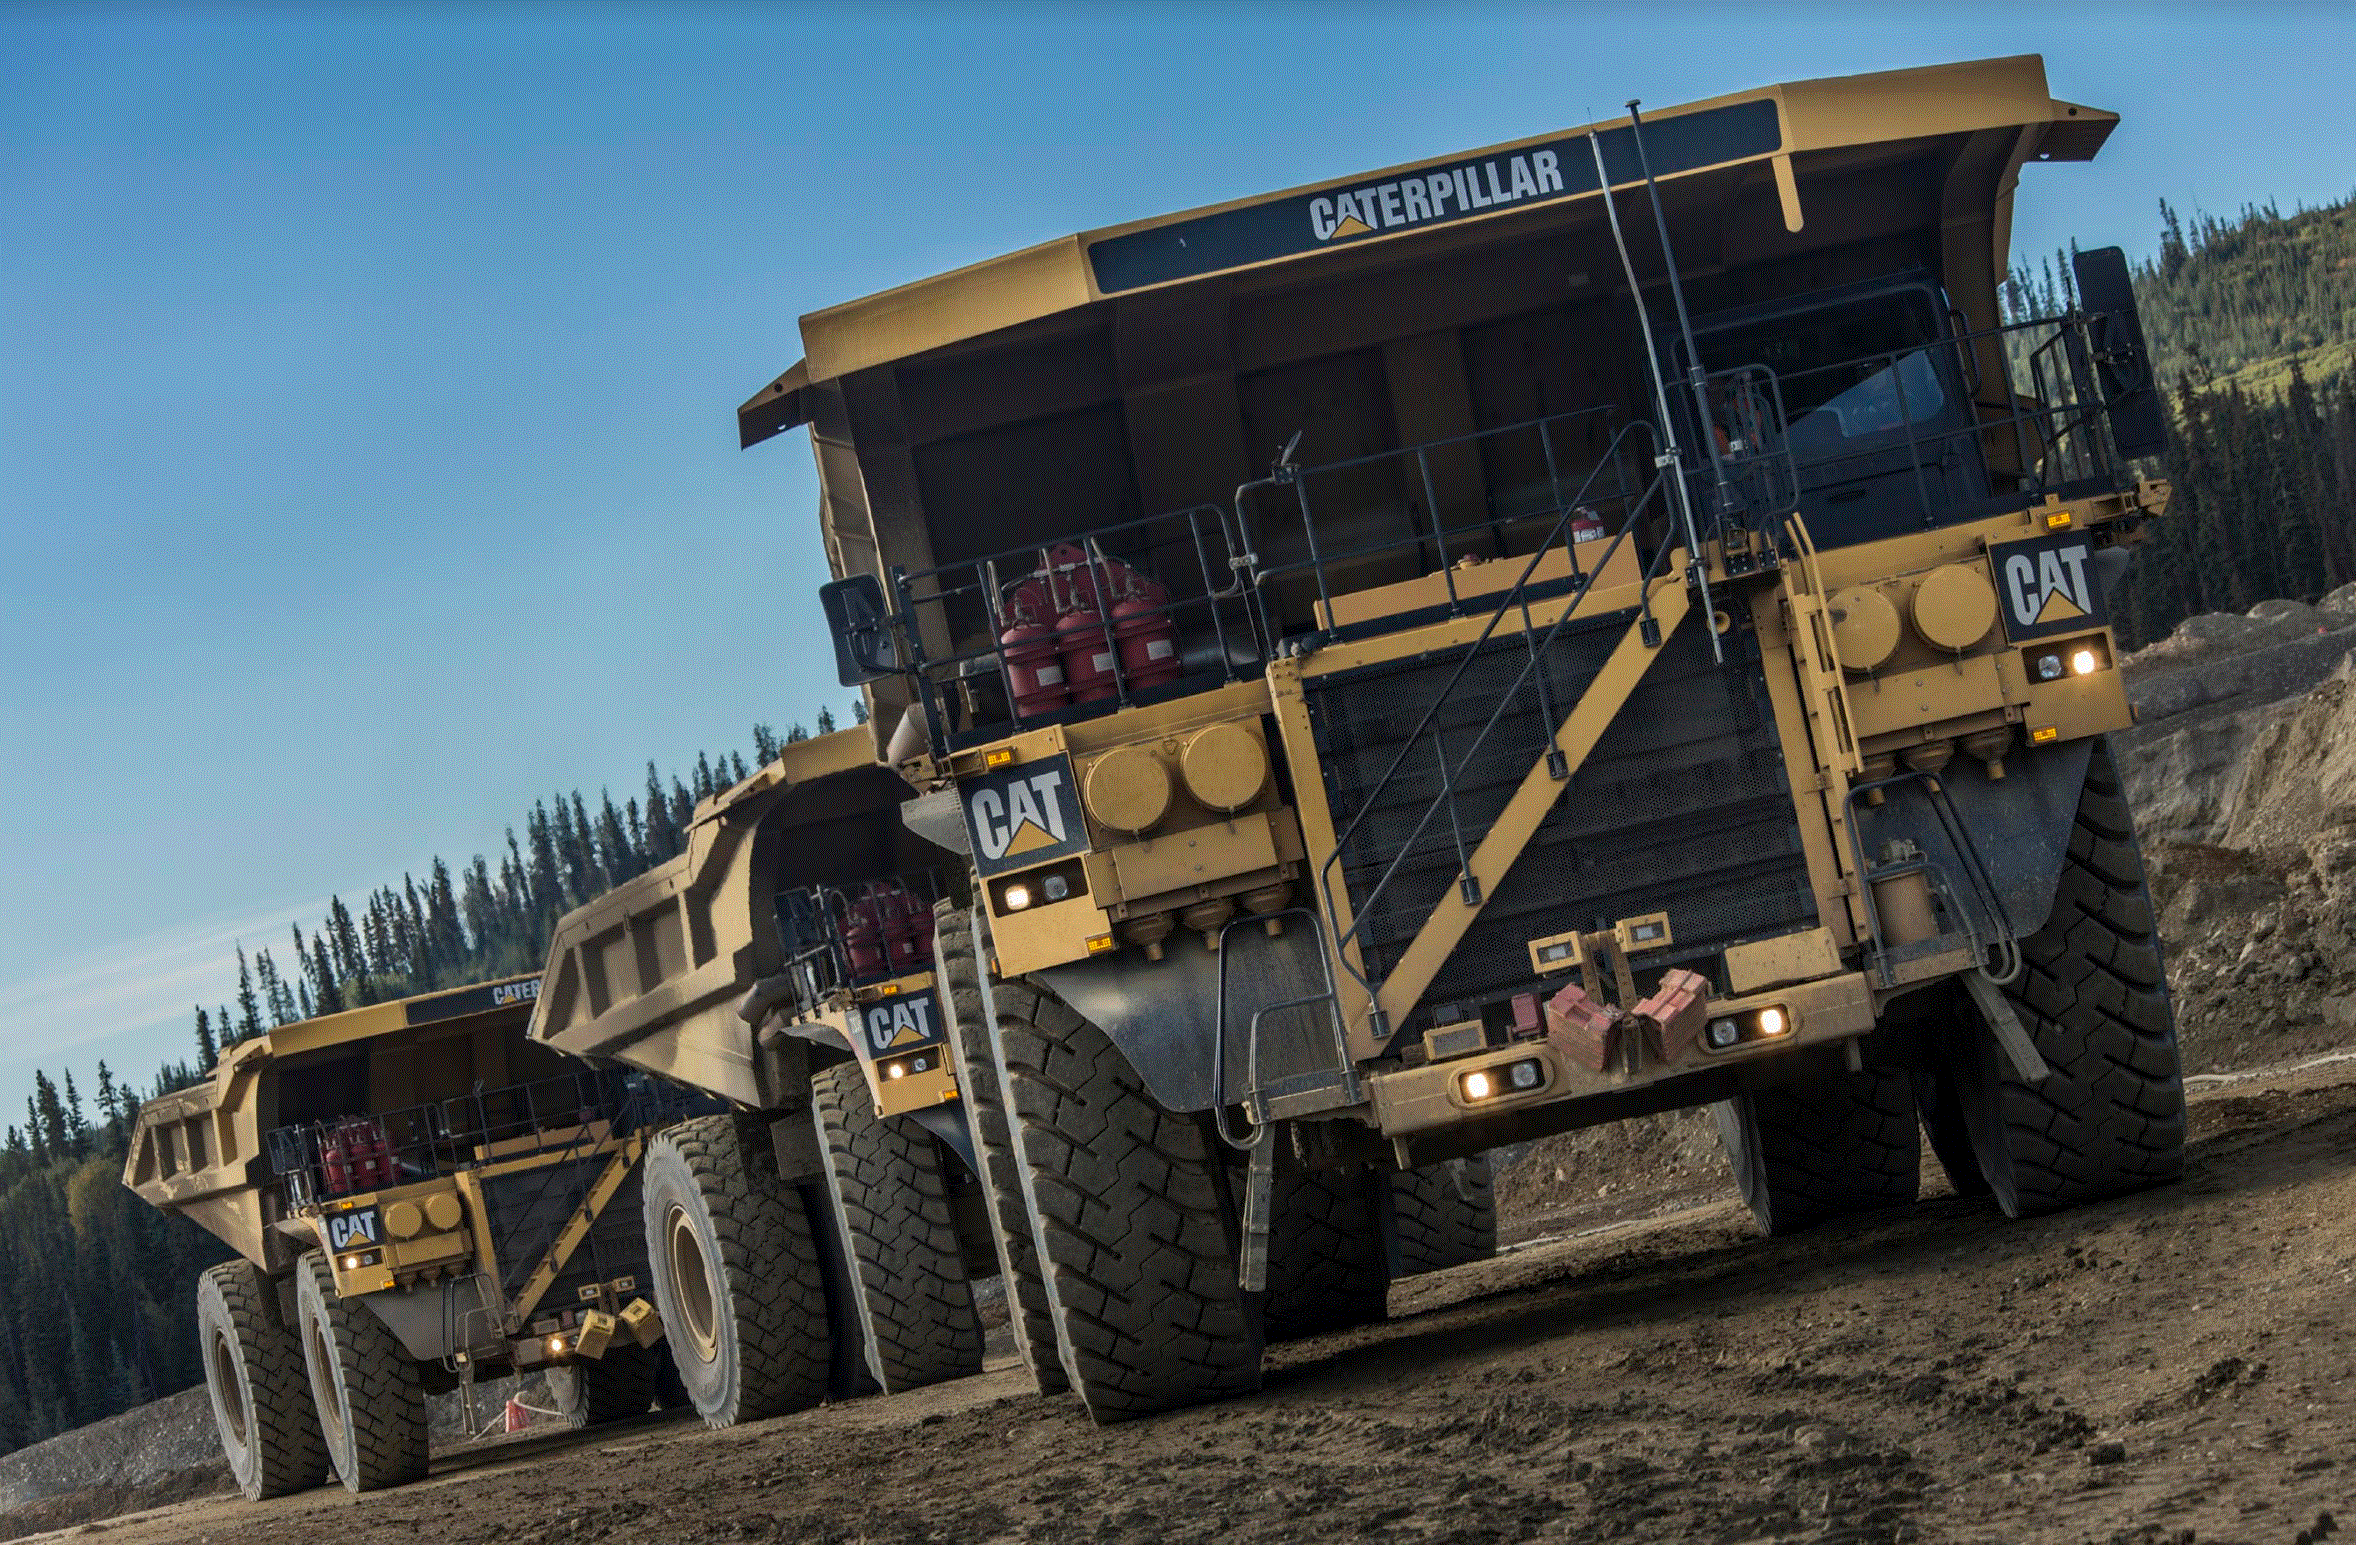 Truck Caterpillars 5000th 793 Headed For Australia Canadian Mining